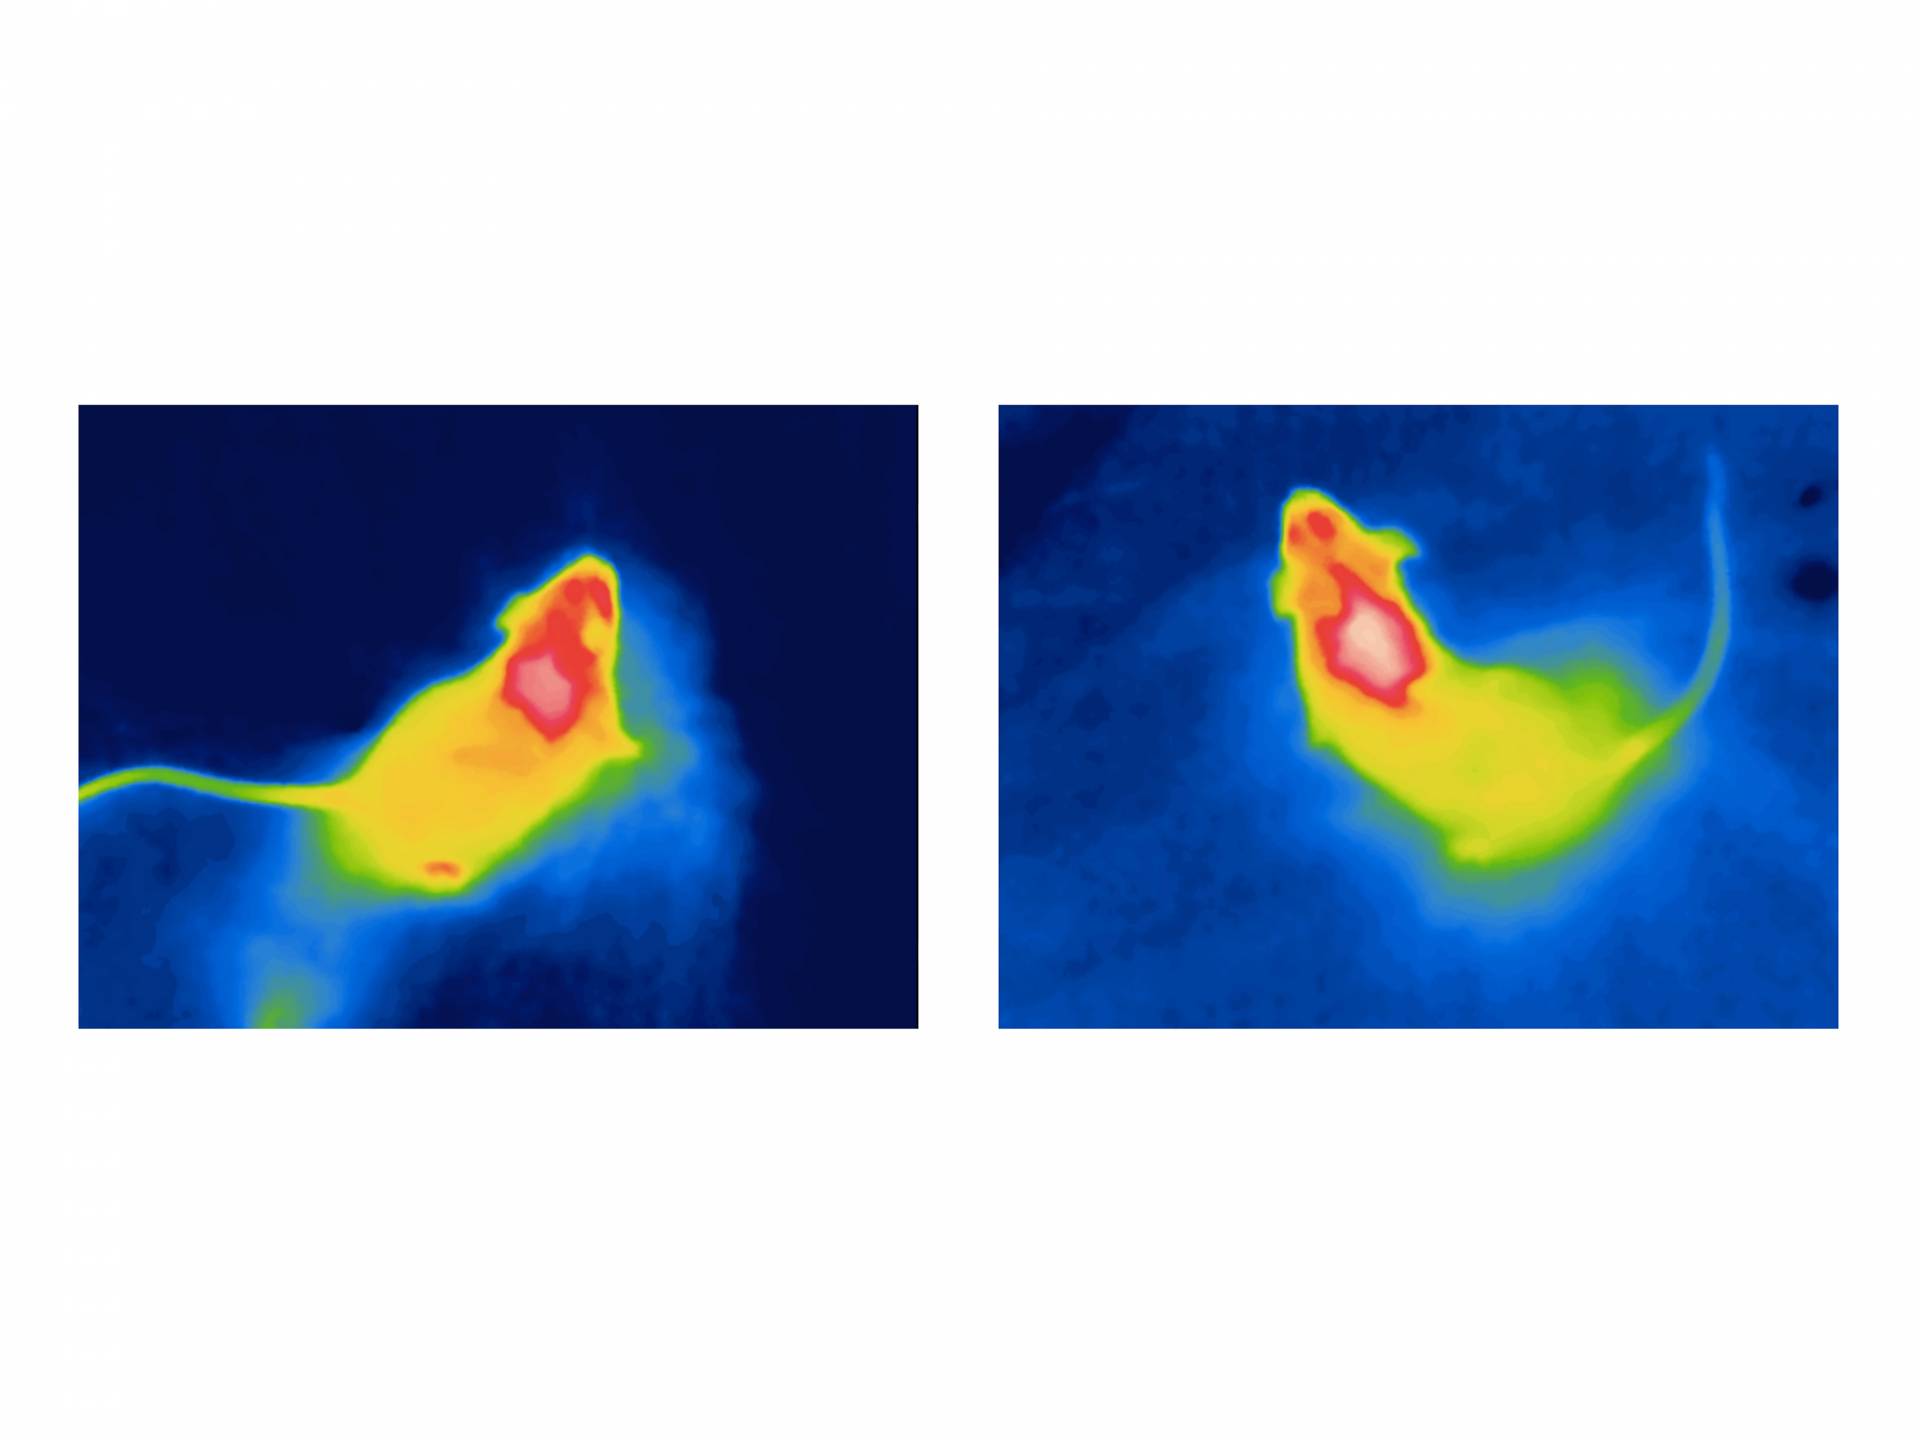 Thermal imaging of mice